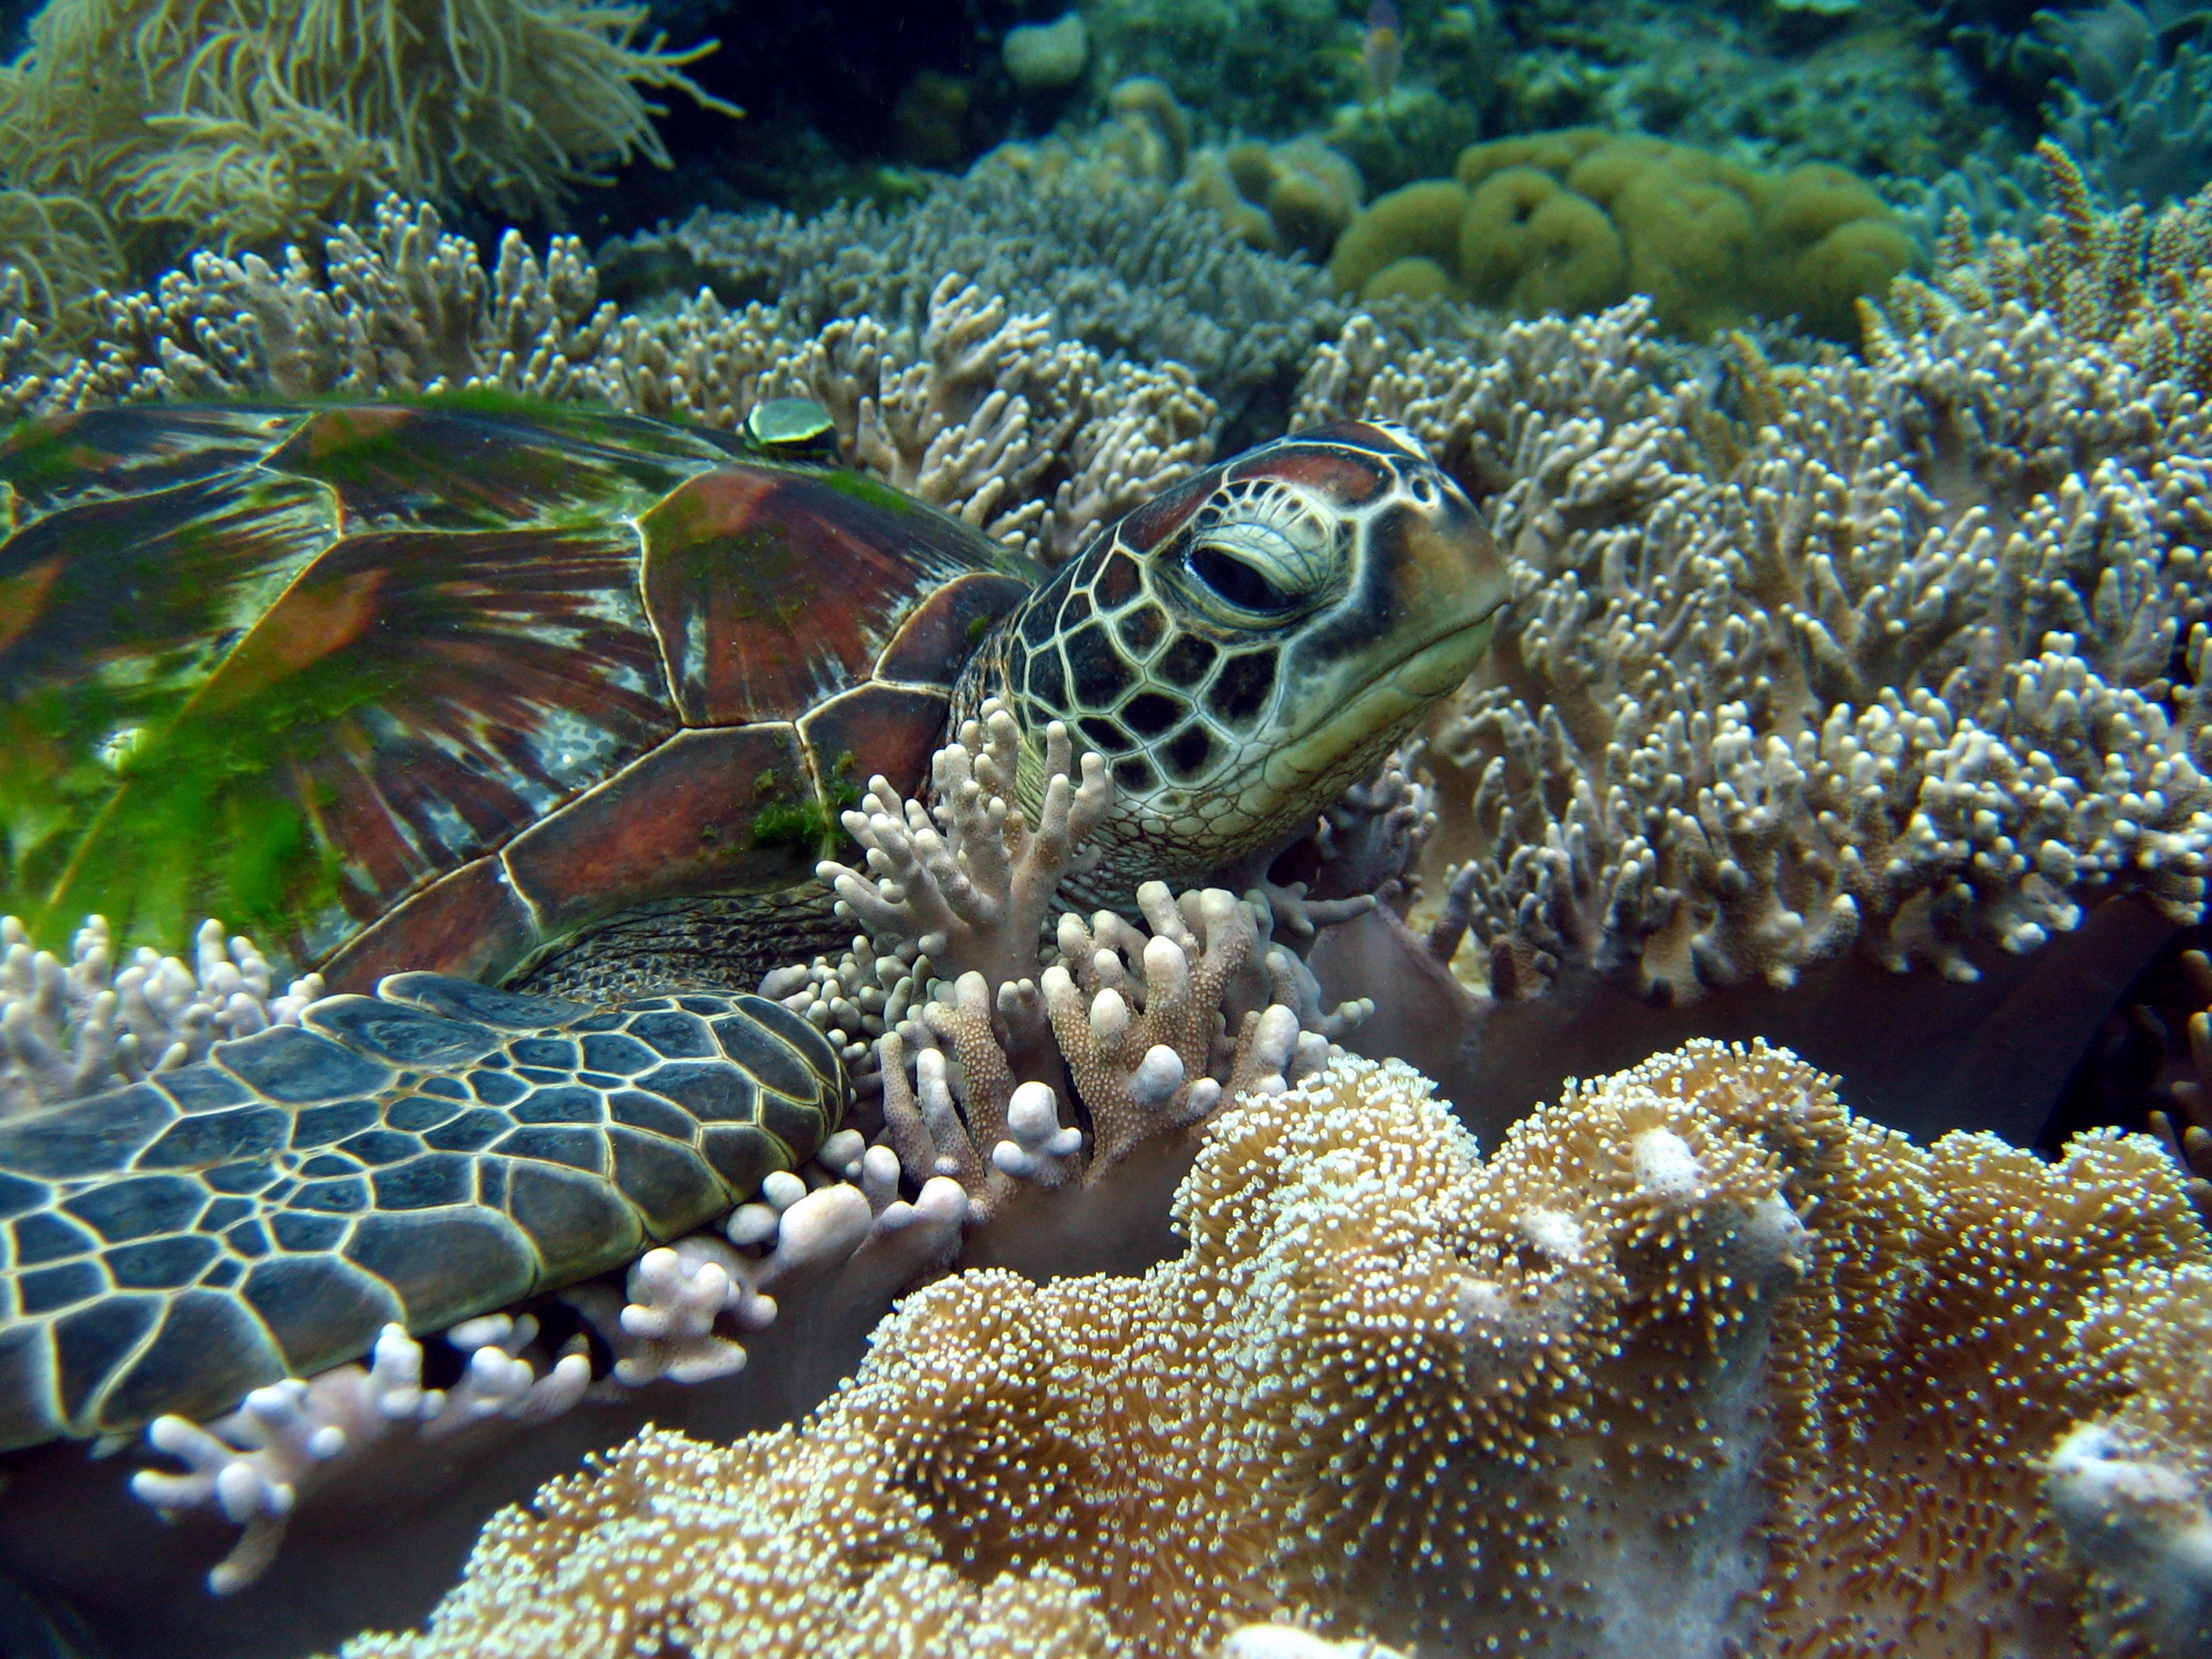 Sea Turtle HD Wallpaper